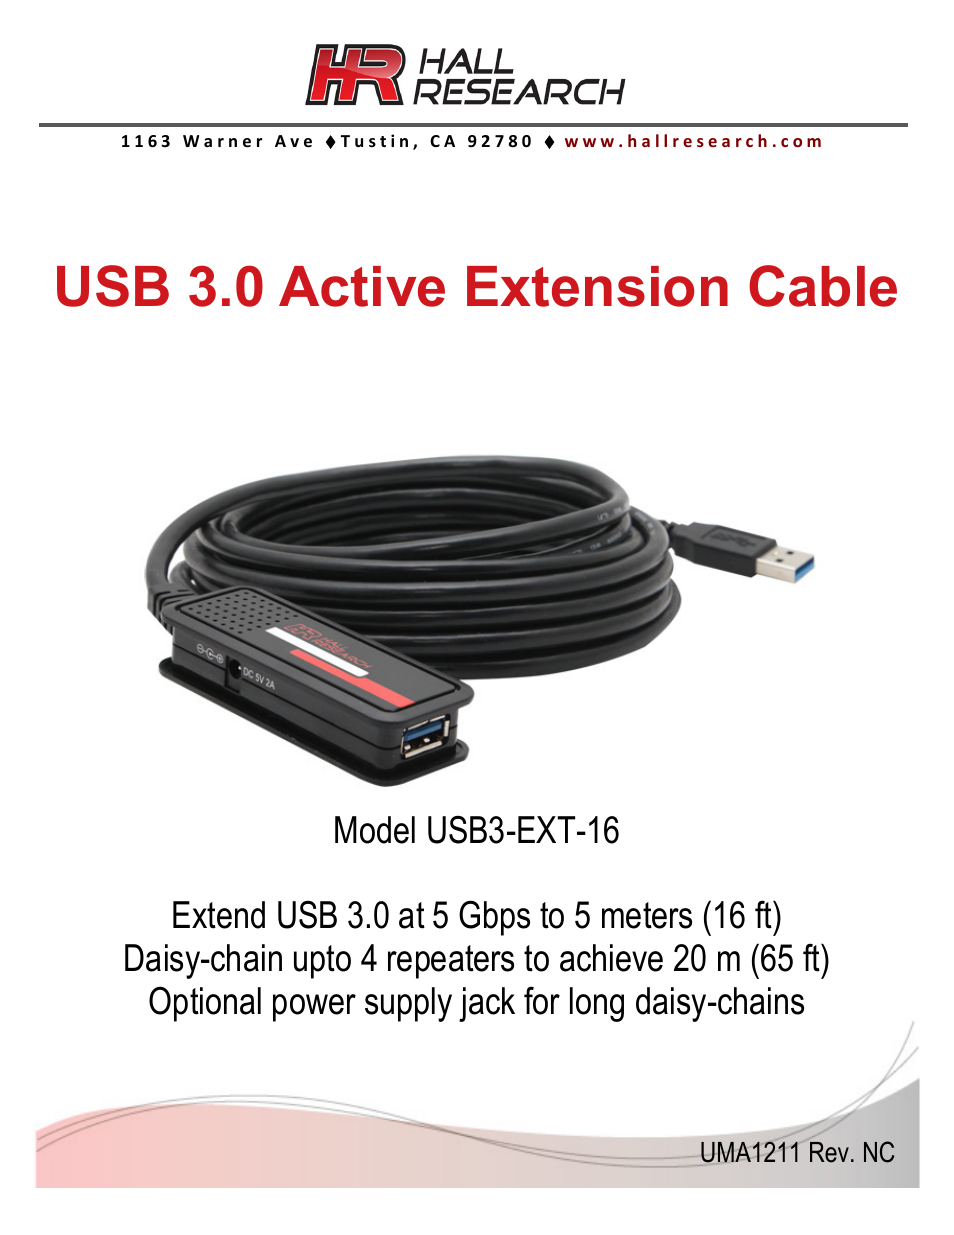 USB3-EXT-16